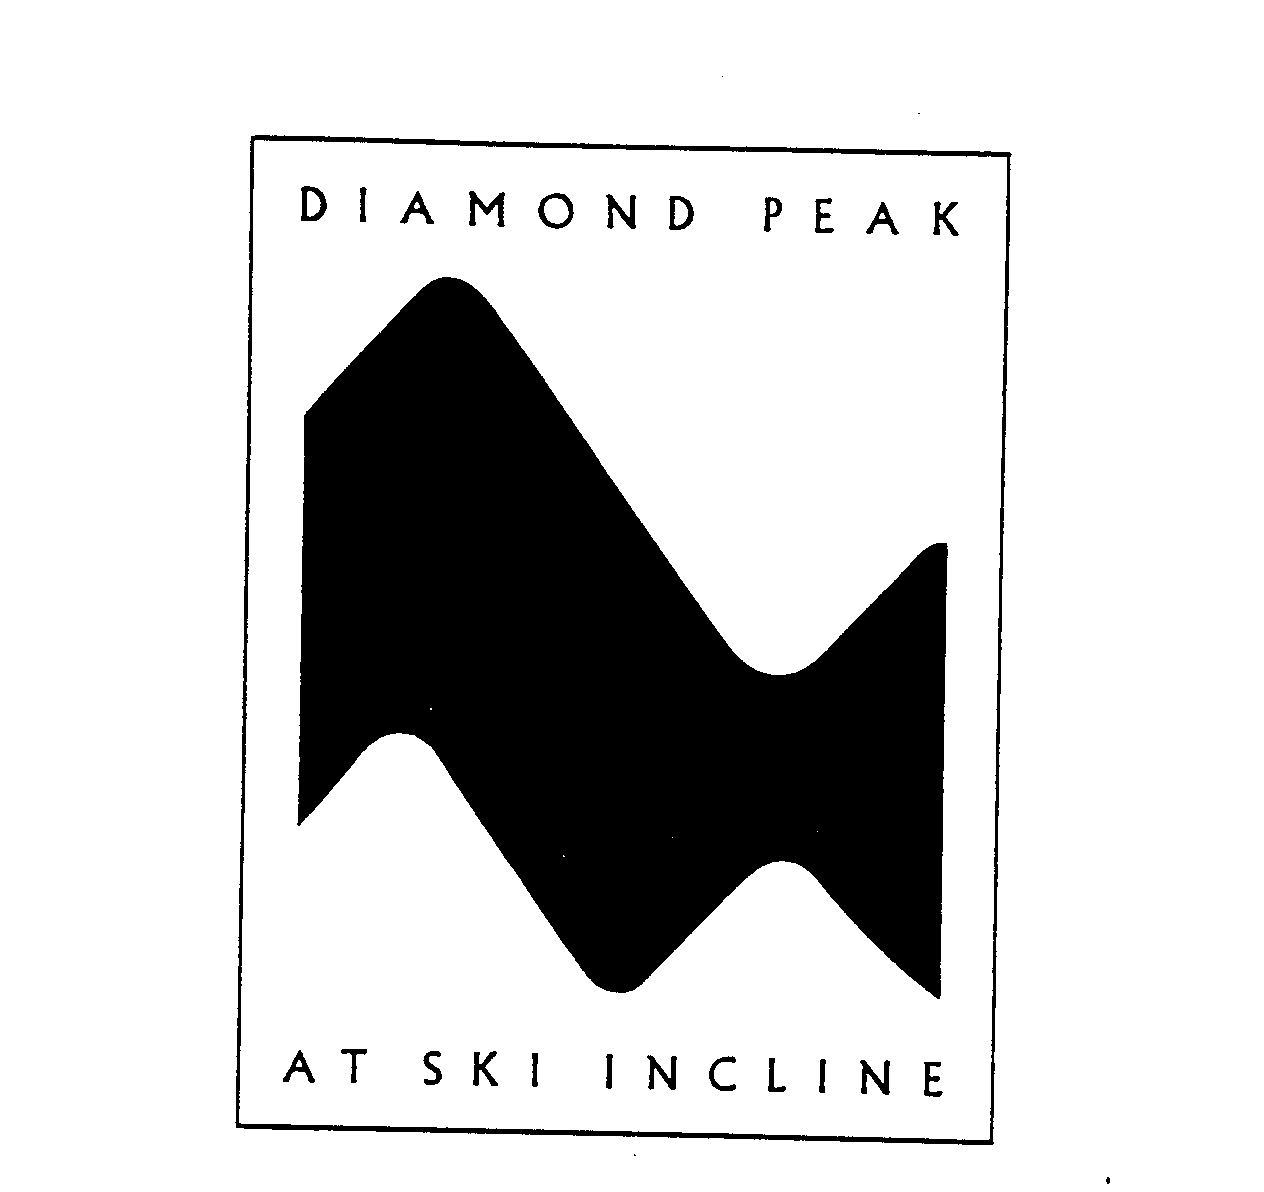  DIAMOND PEAK AT SKI INCLINE